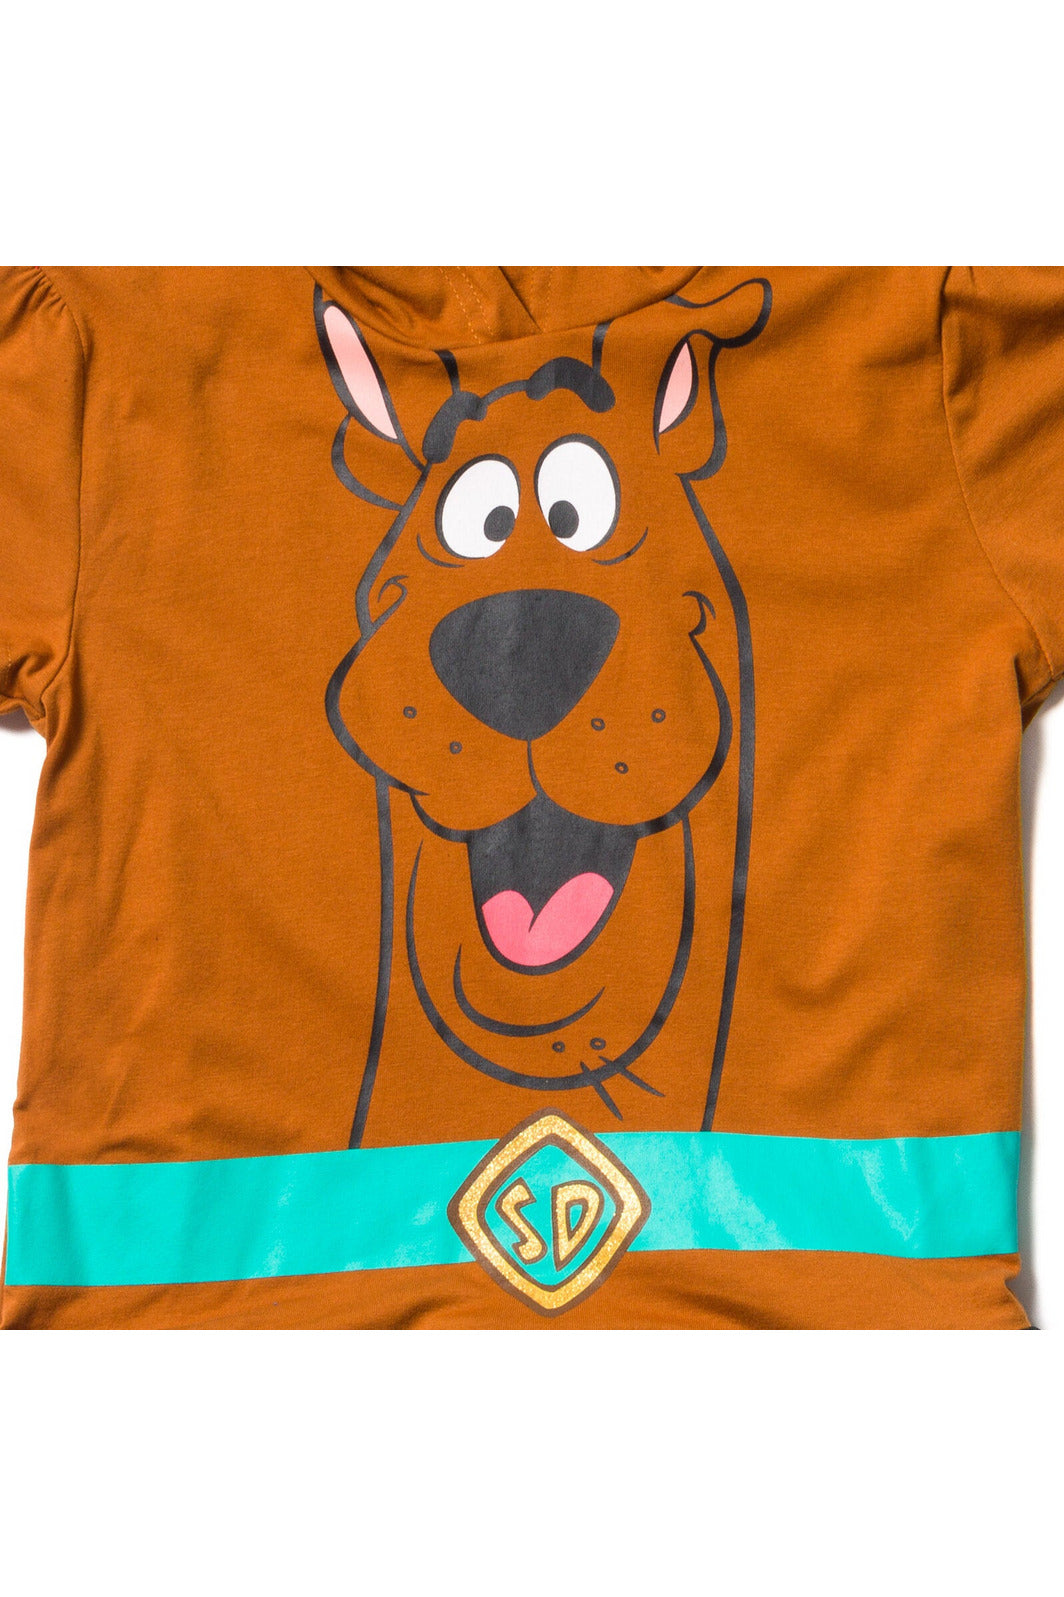 Warner Bros. Scooby Doo Cosplay Graphic T-Shirt Dress & Leggings